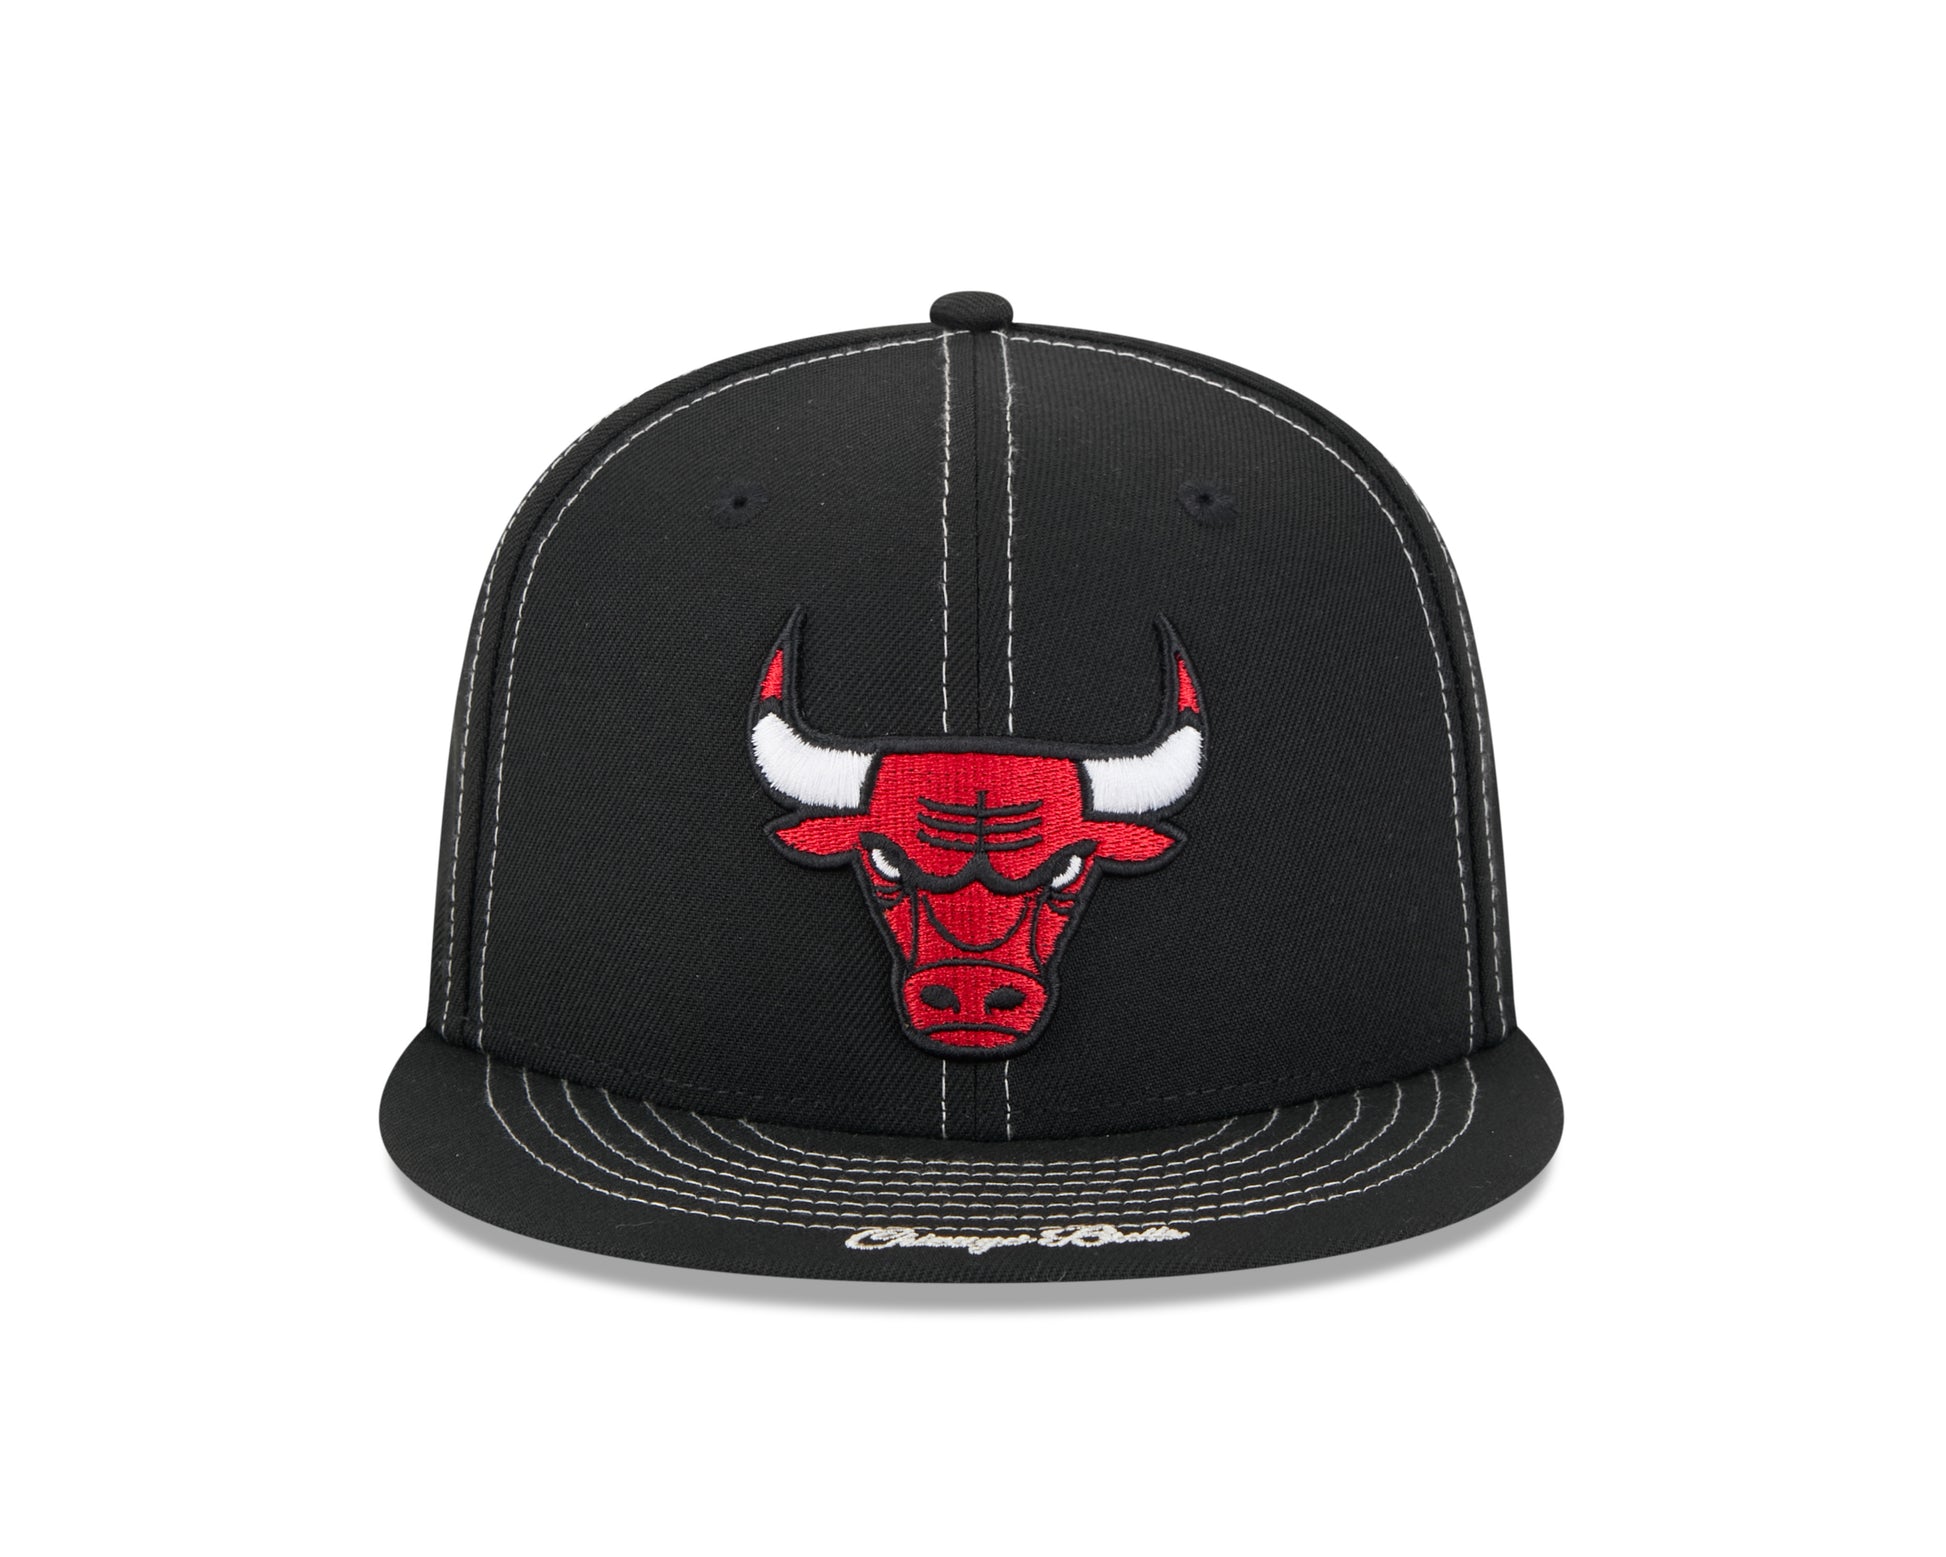 New Era - 59fifty Fitted Cap - Chicago Bulls - Summer Classic - Black - Headz Up 